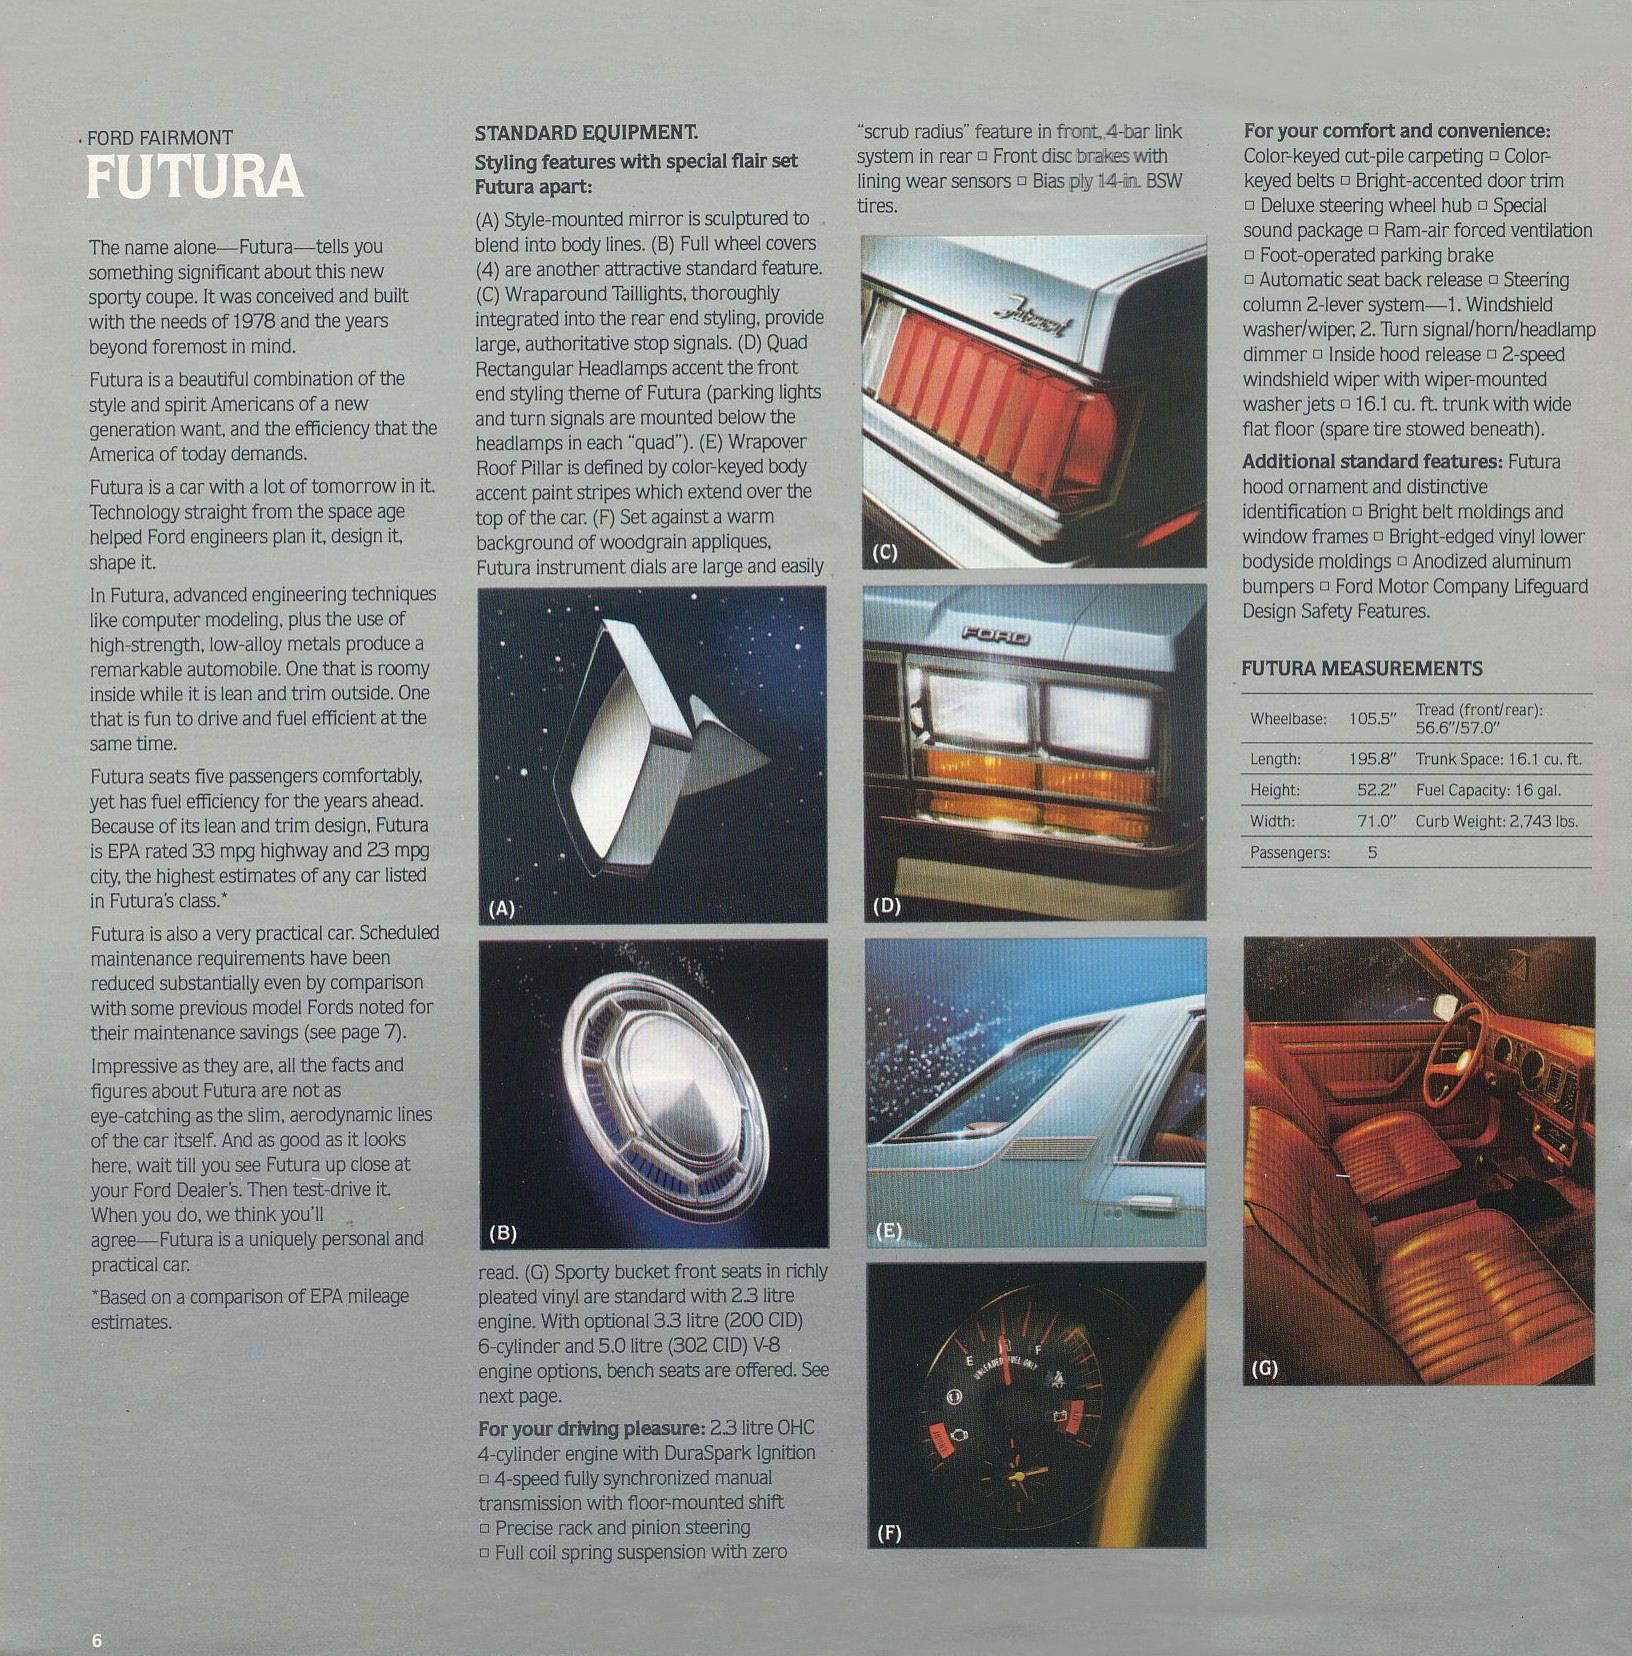 1978 Ford Fairmont Futura Brochure Page 2